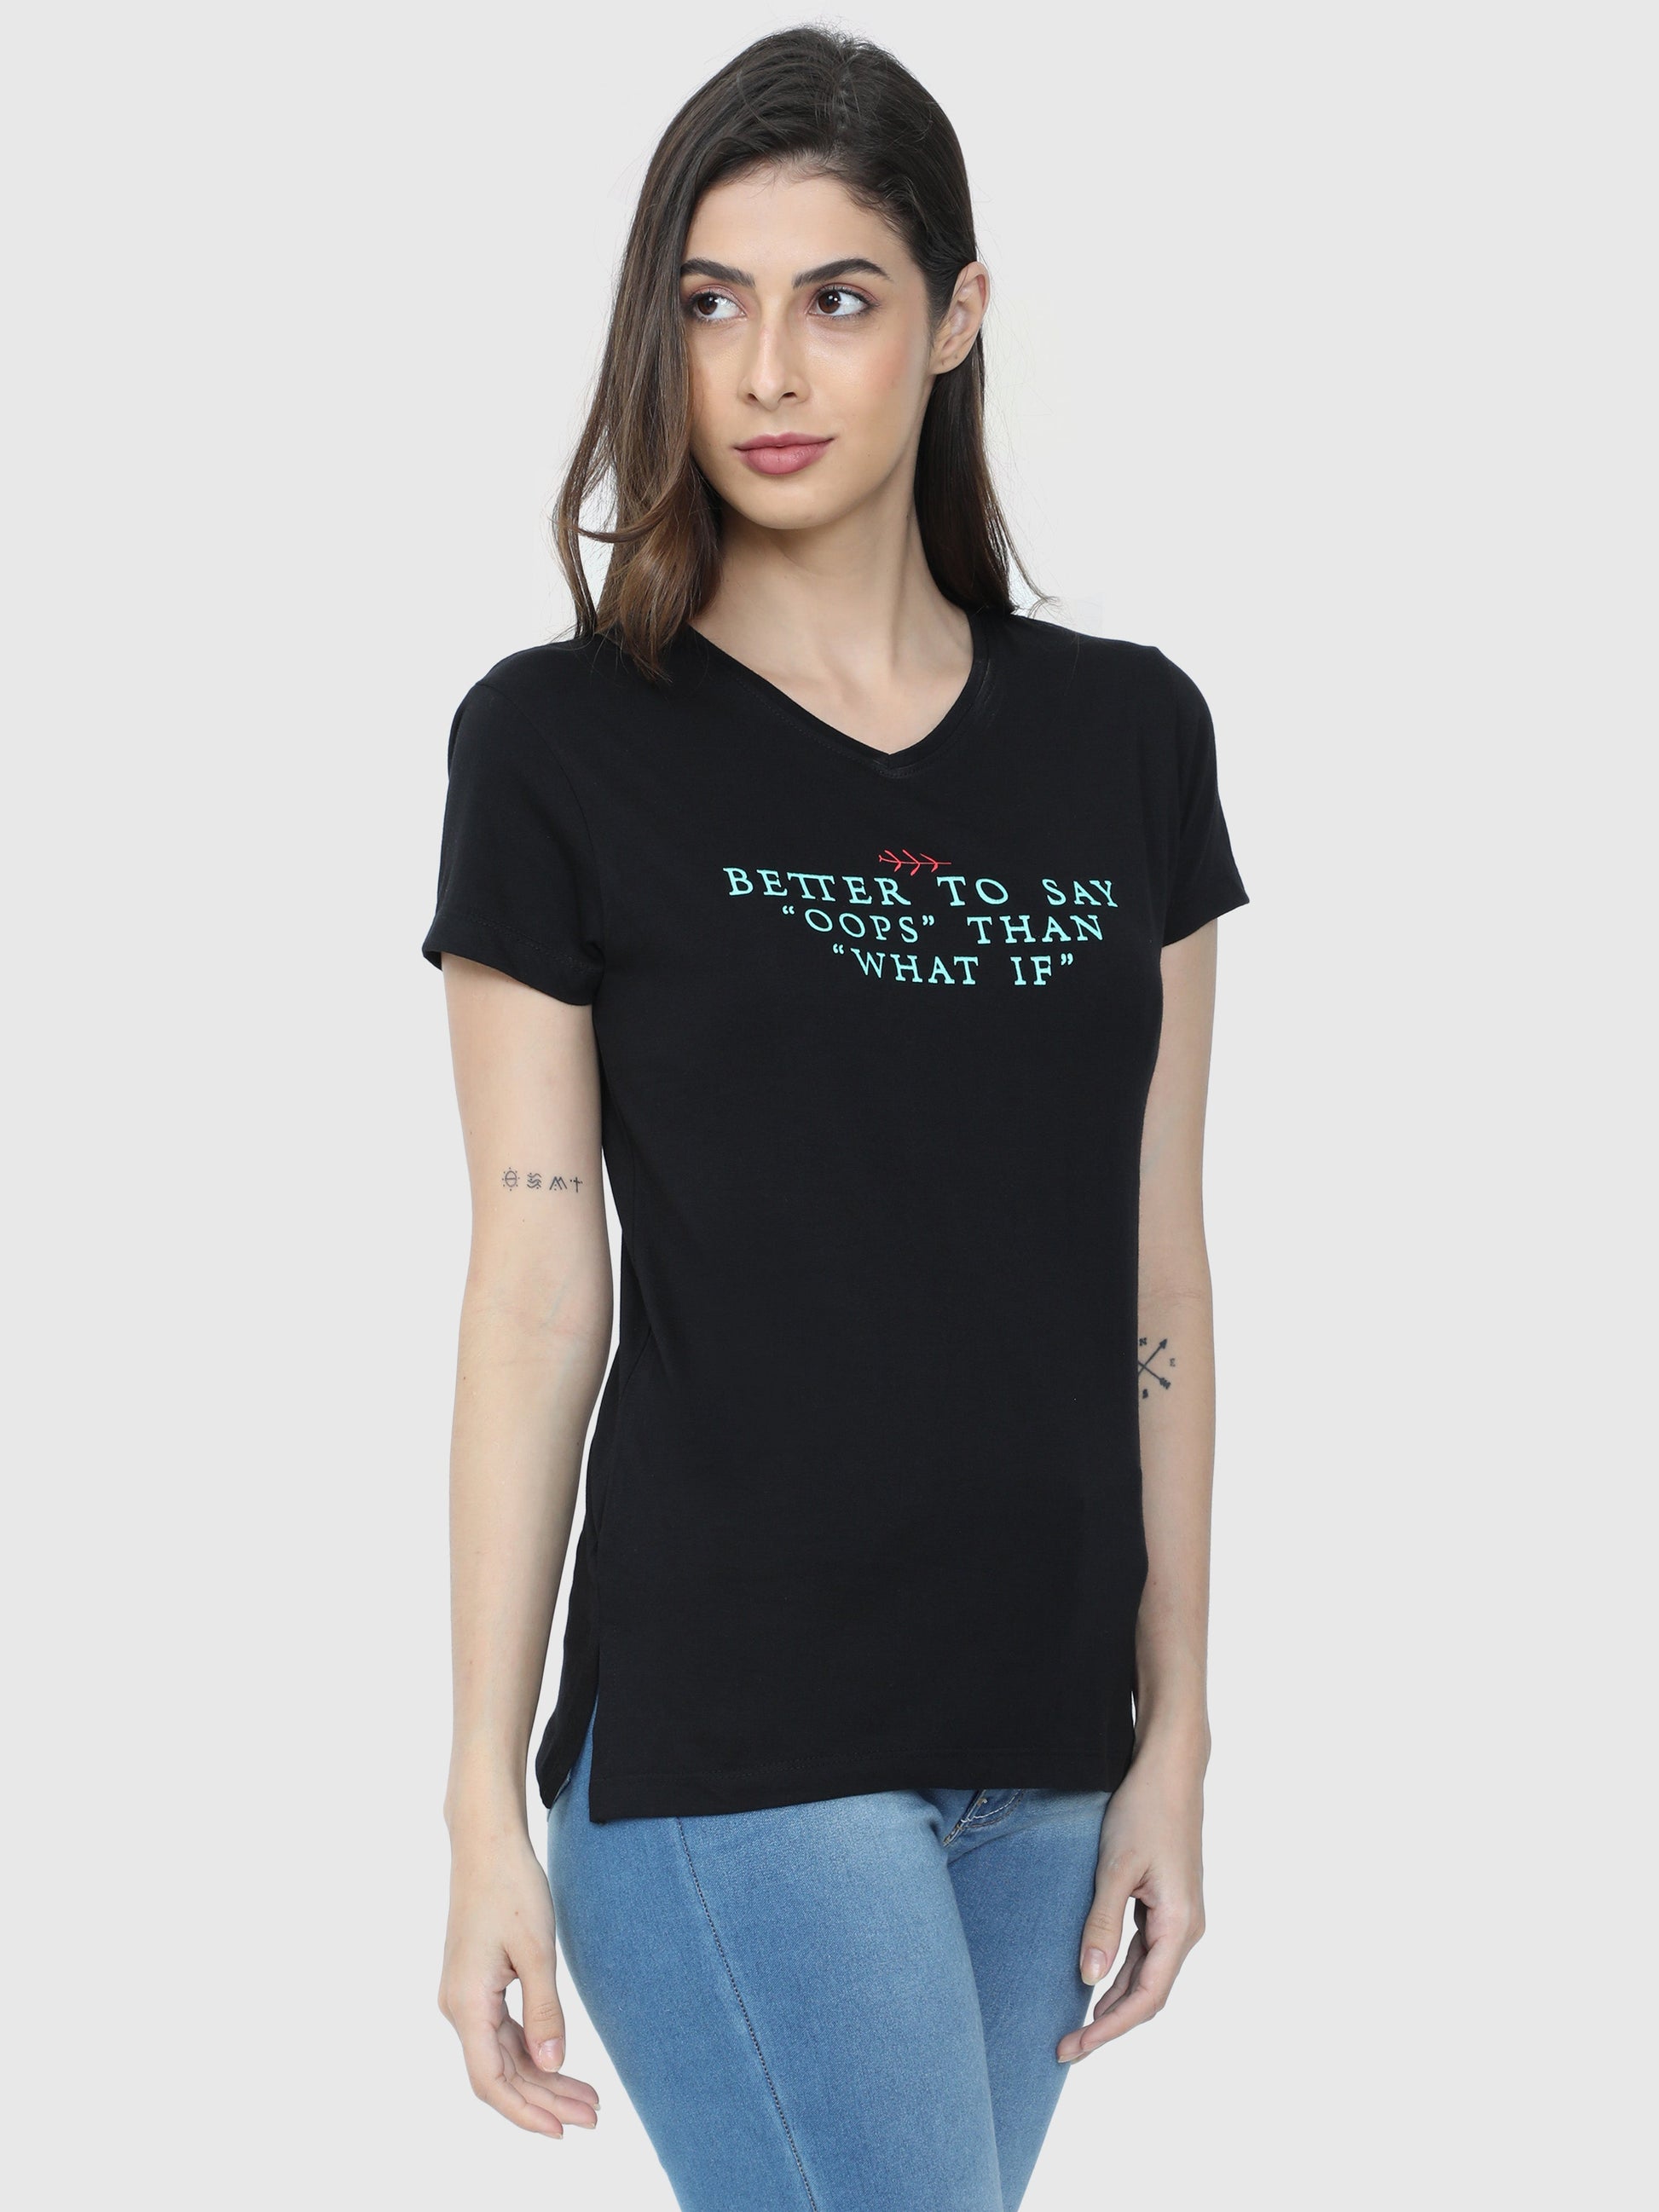 Raven Black Printed T-Shirt CWTP-17012